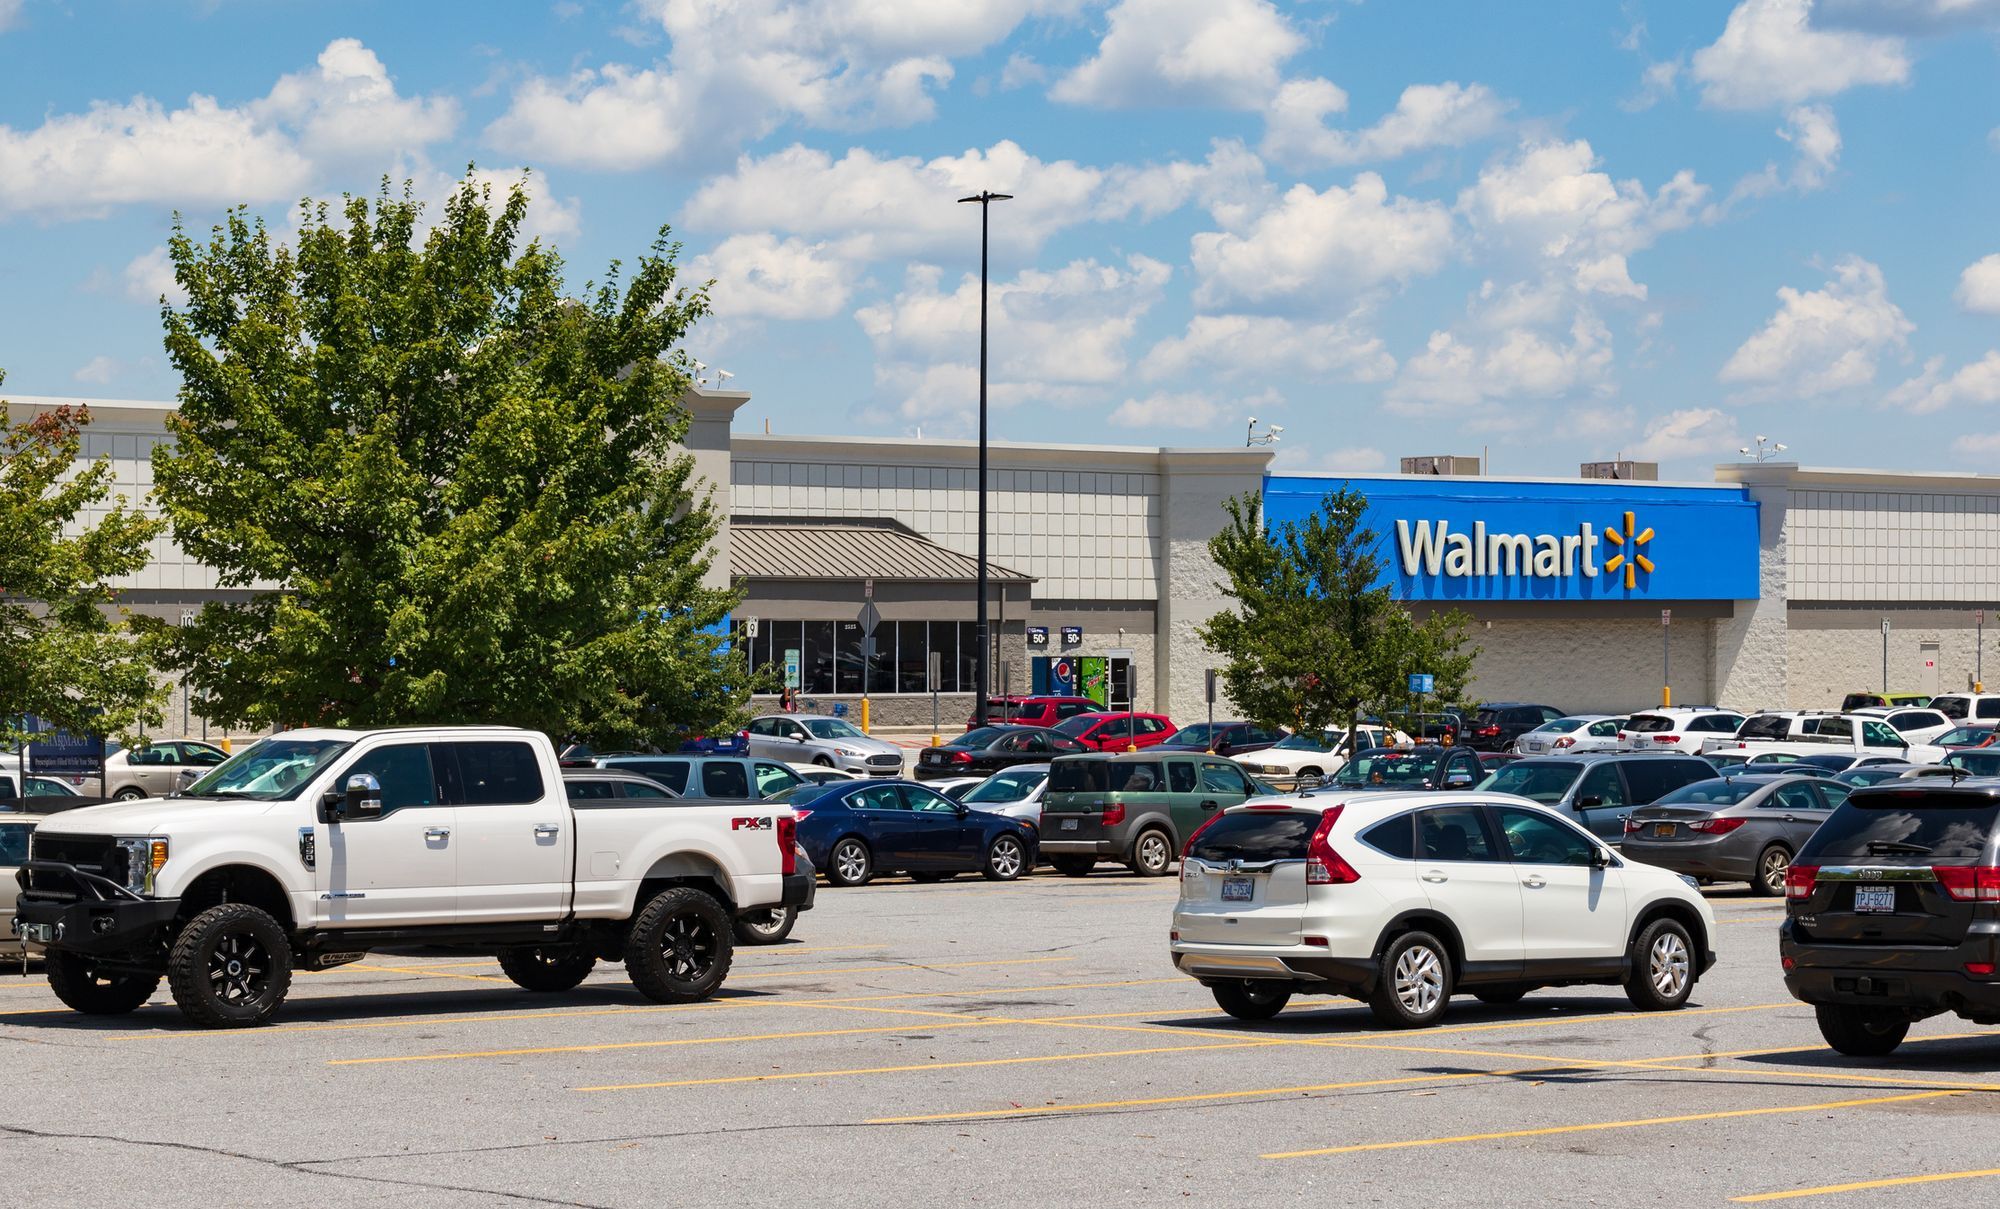 Vehicles parked at a Walmart parking lot.